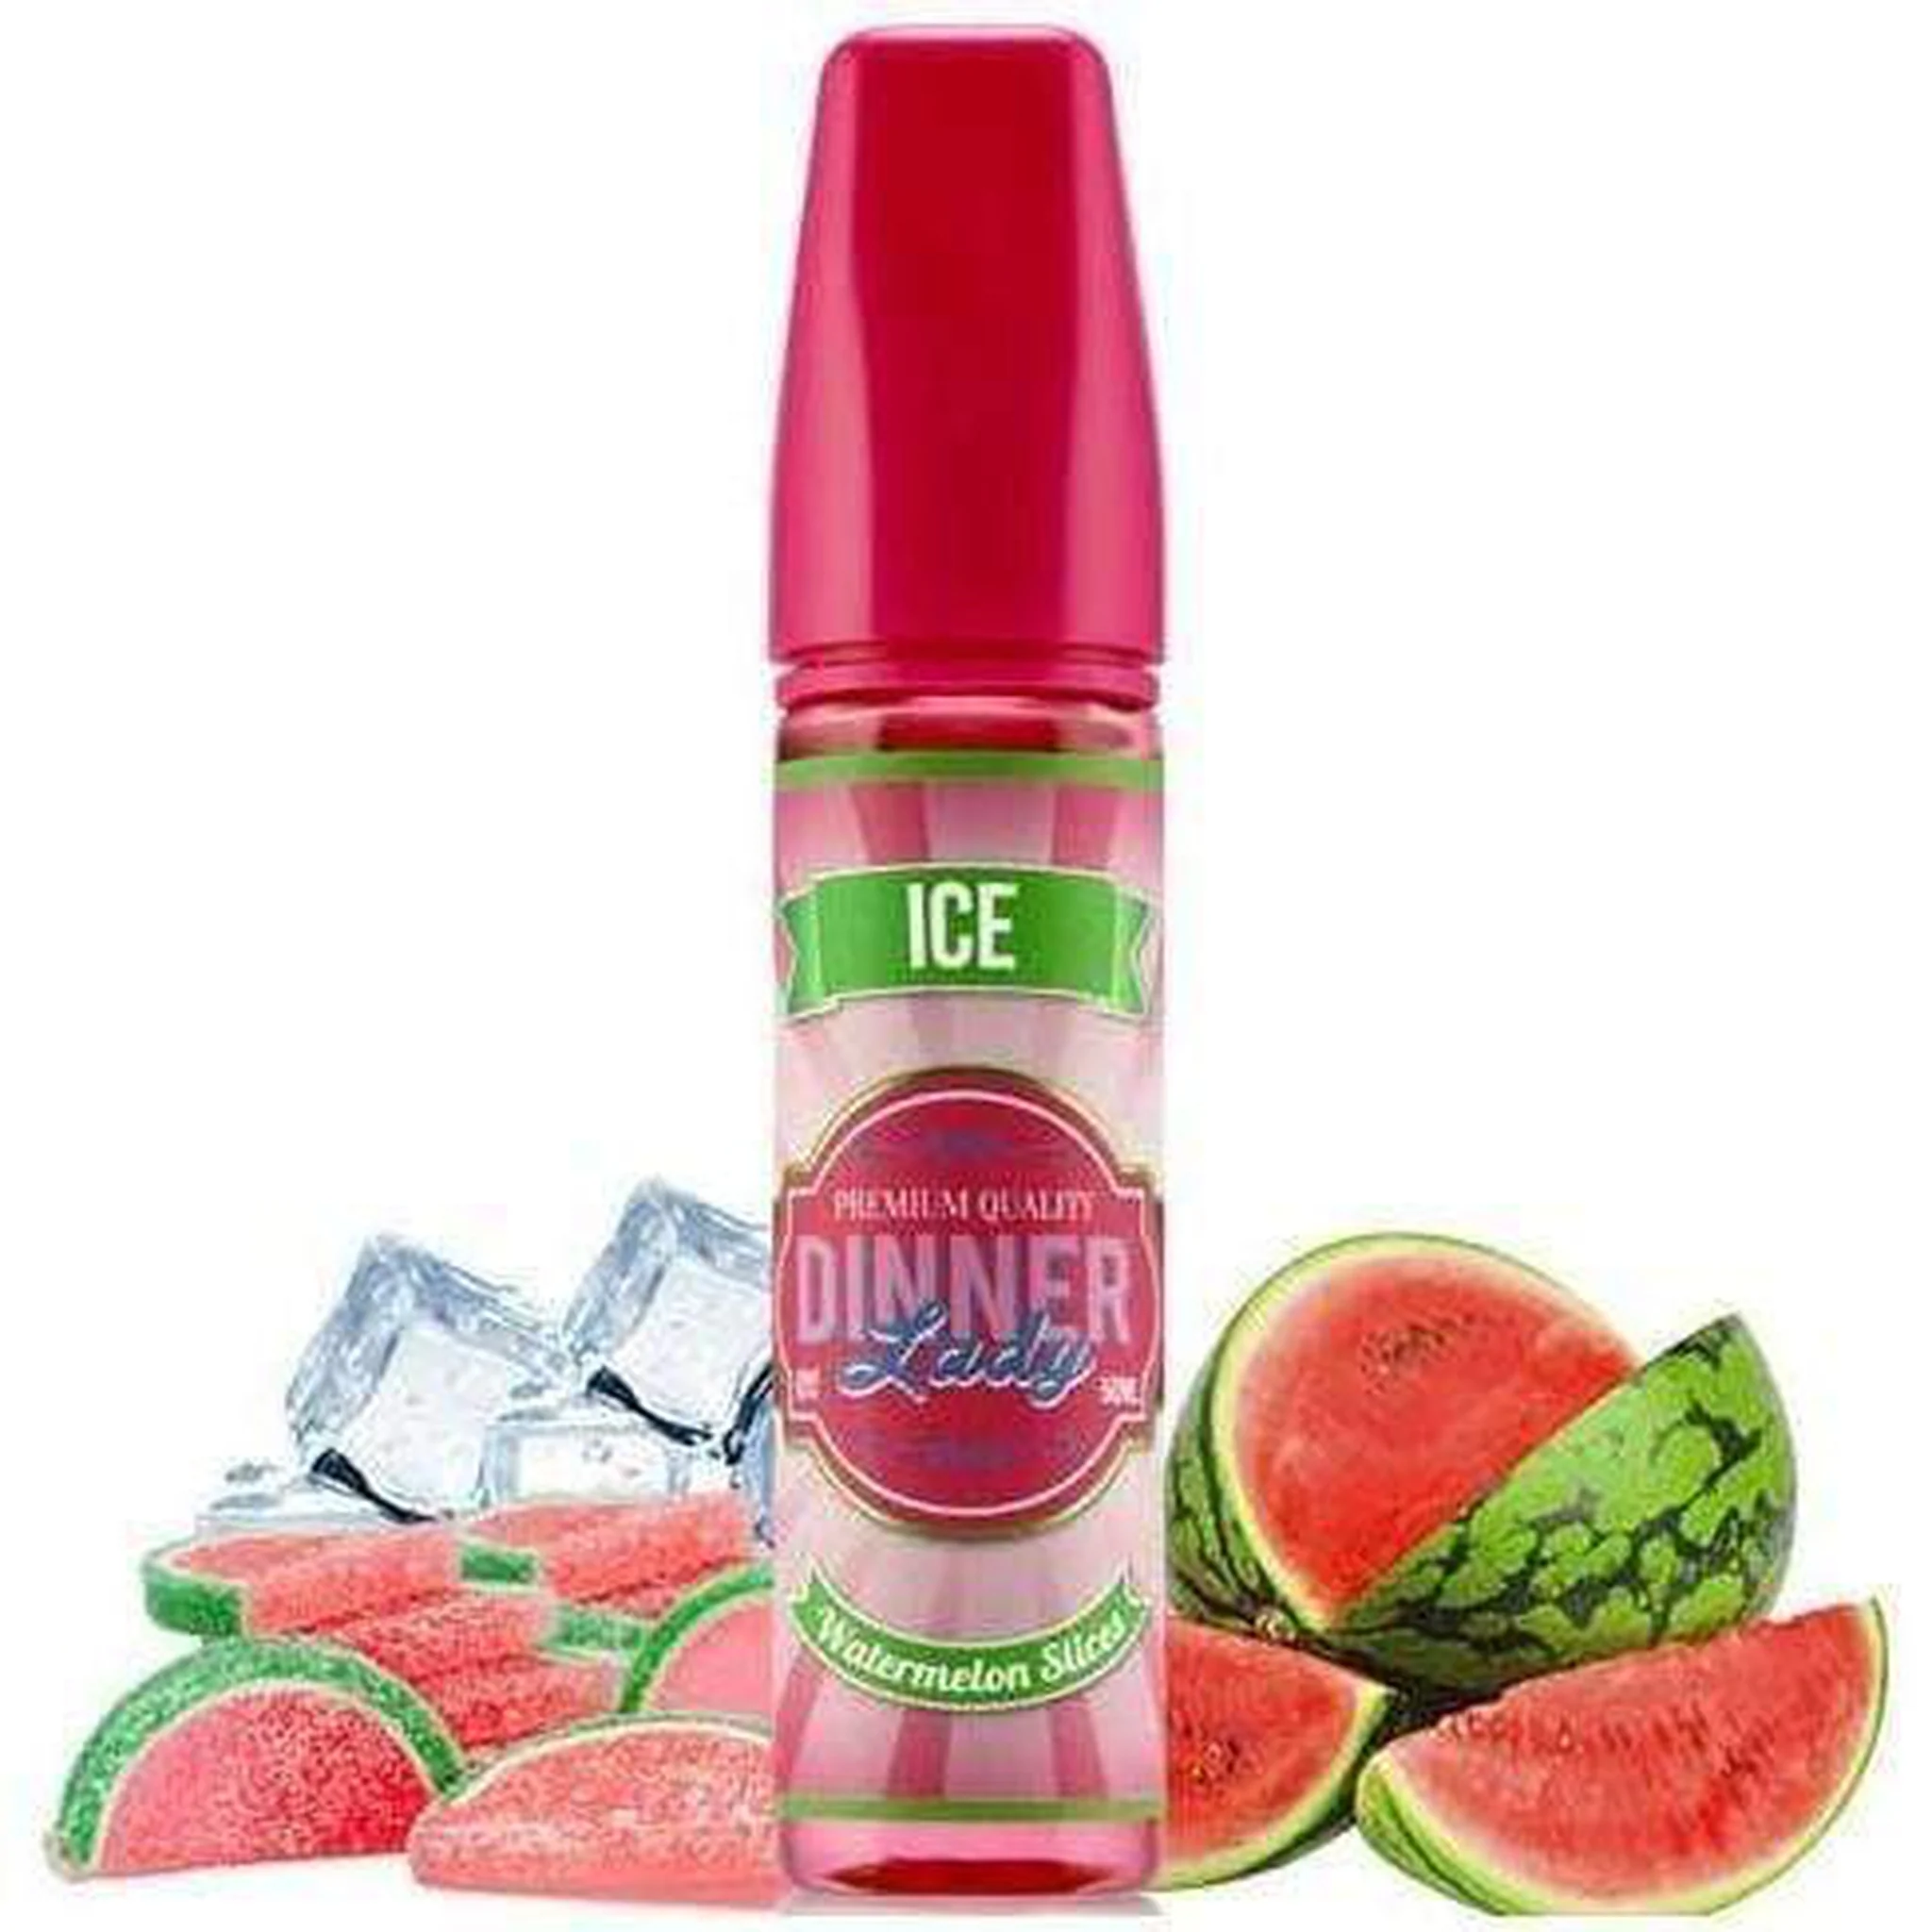 watermelon-slices-ice-by-dinner-lady-tuck-shop-e-liquid-60ml-14395698249794.webp